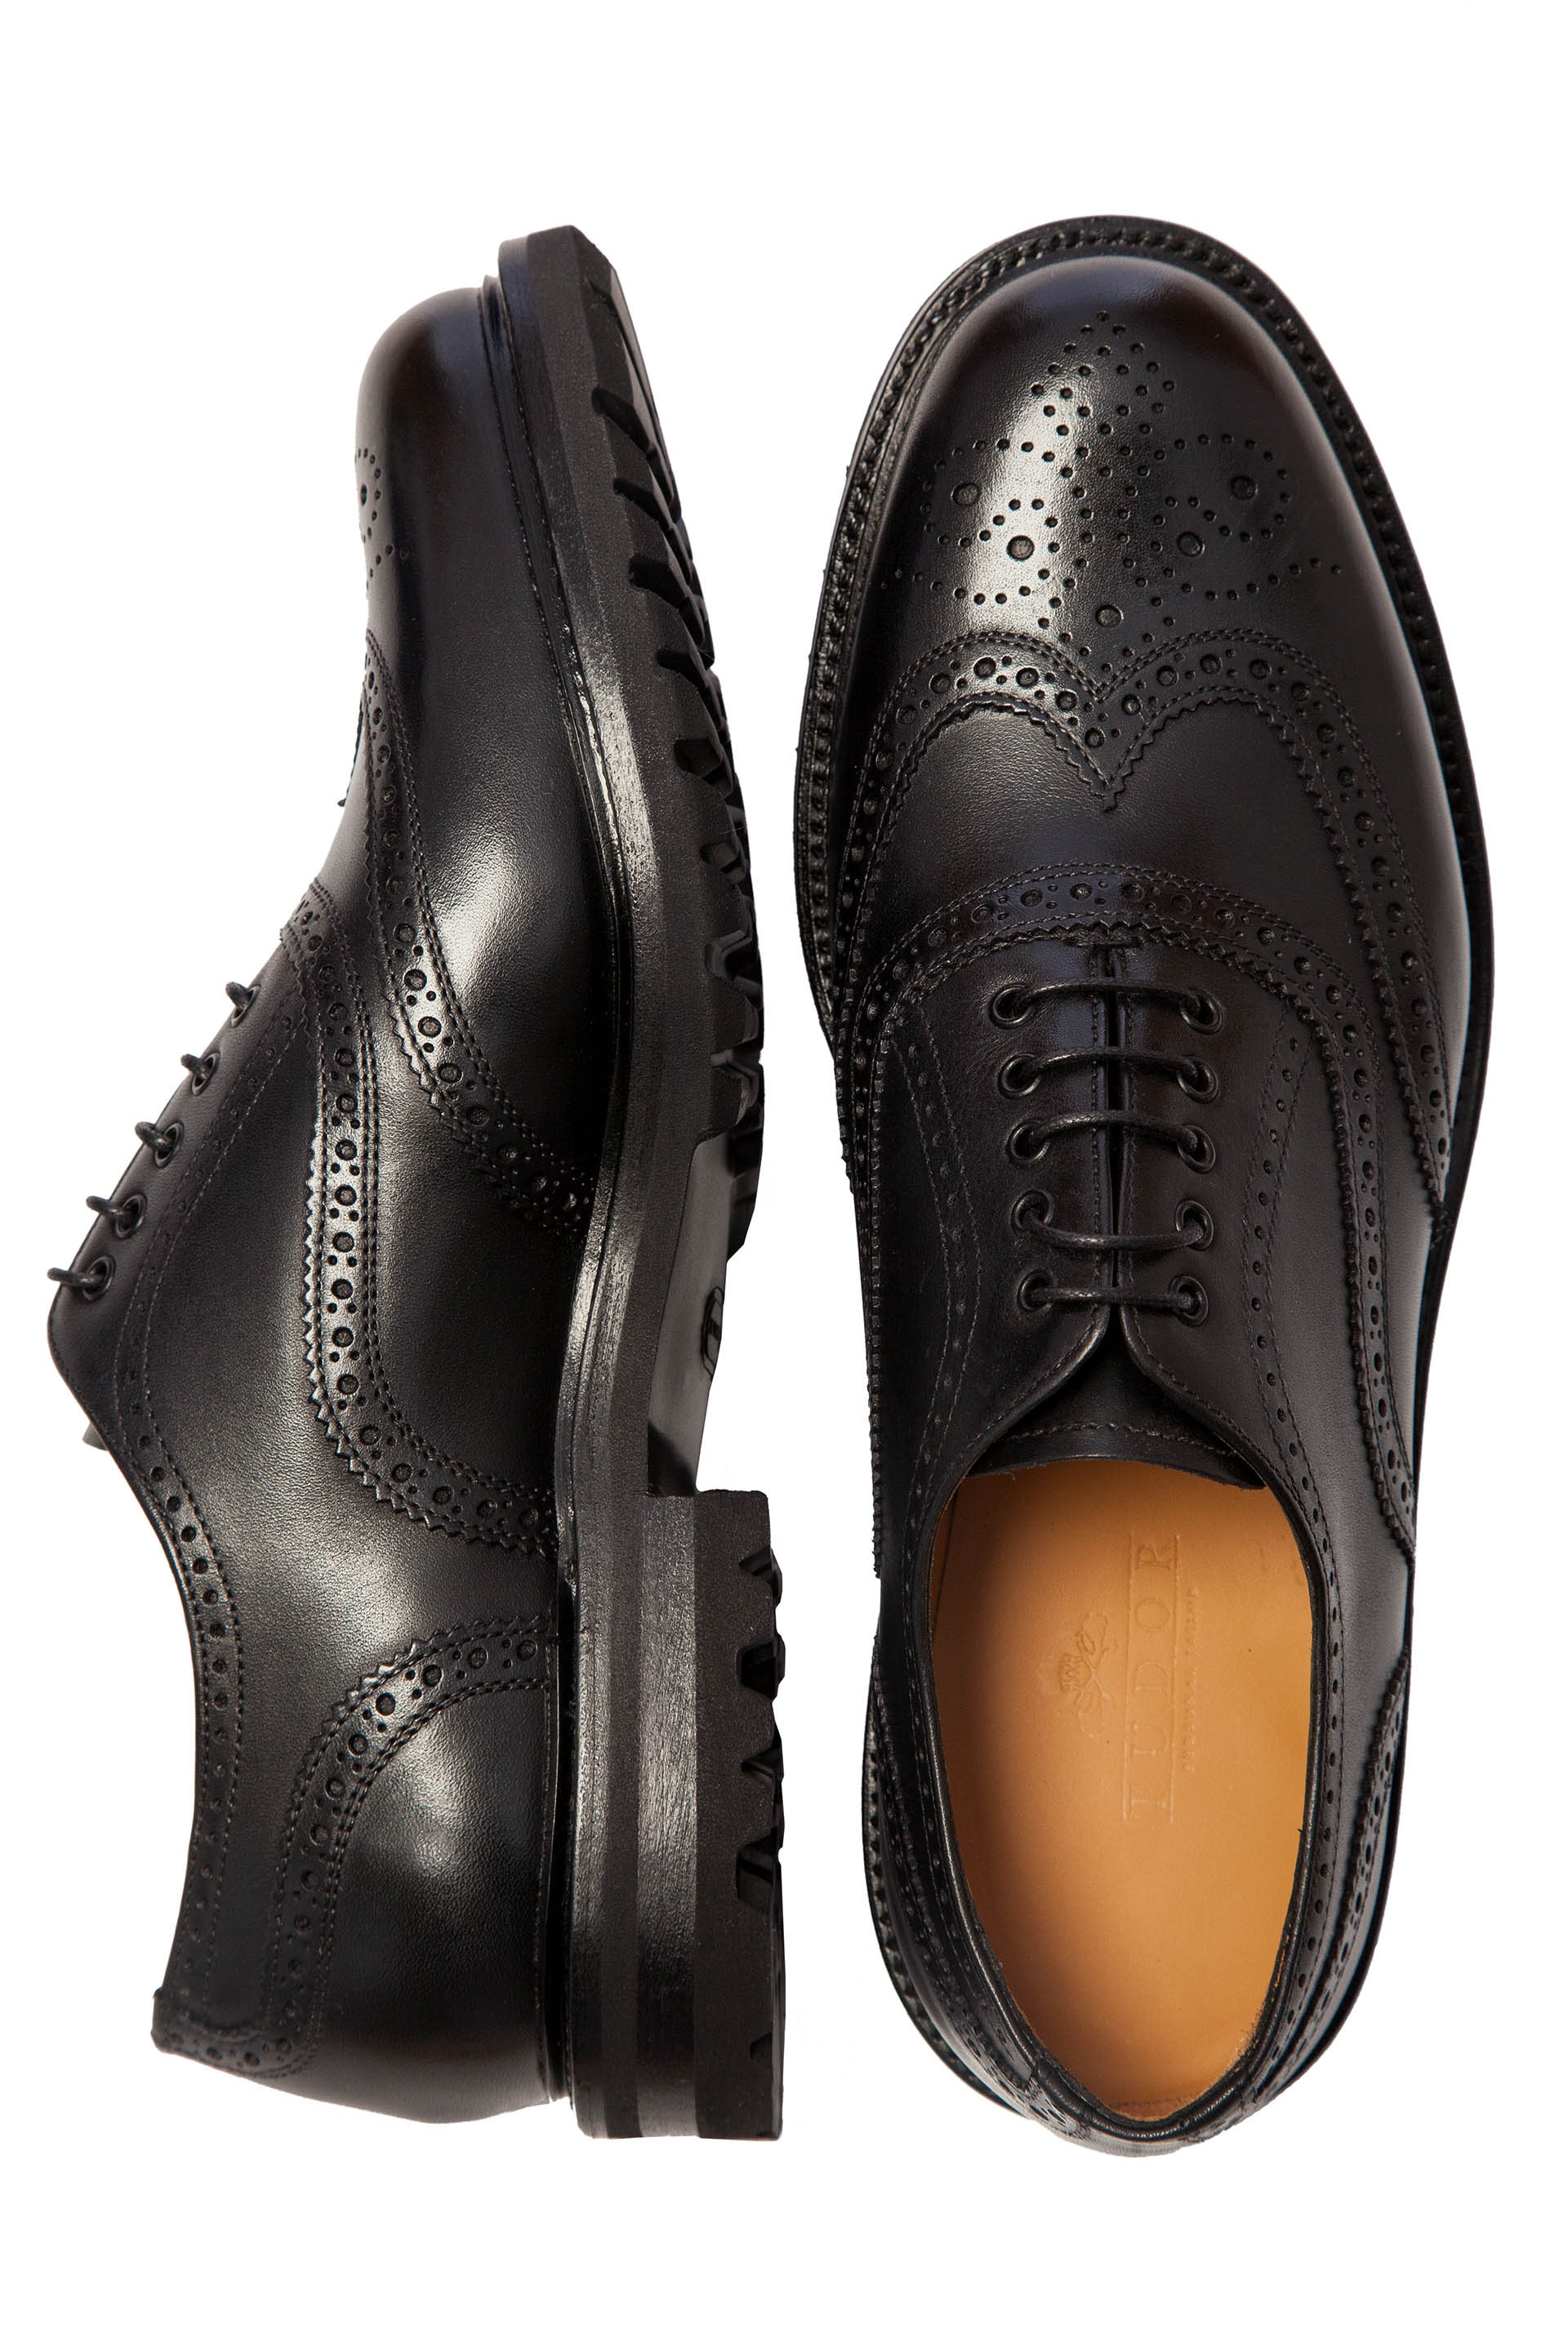 Elegant Men's Oxford Black Leather Shoes - Tudor Tailor